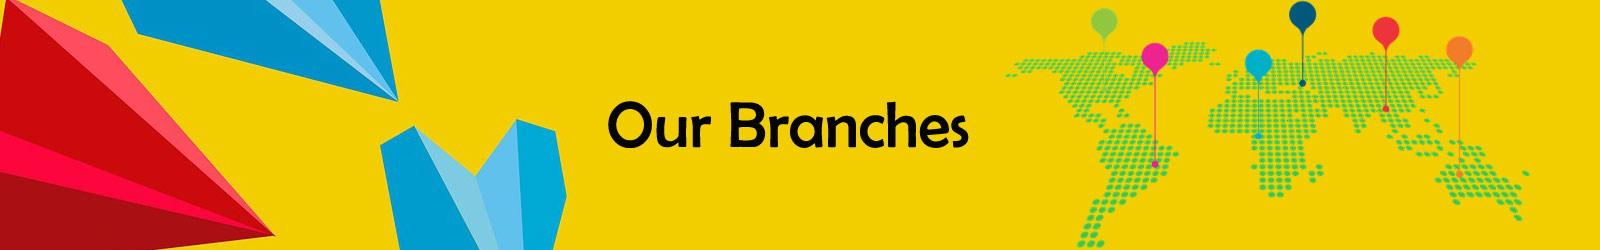 Branch-banner